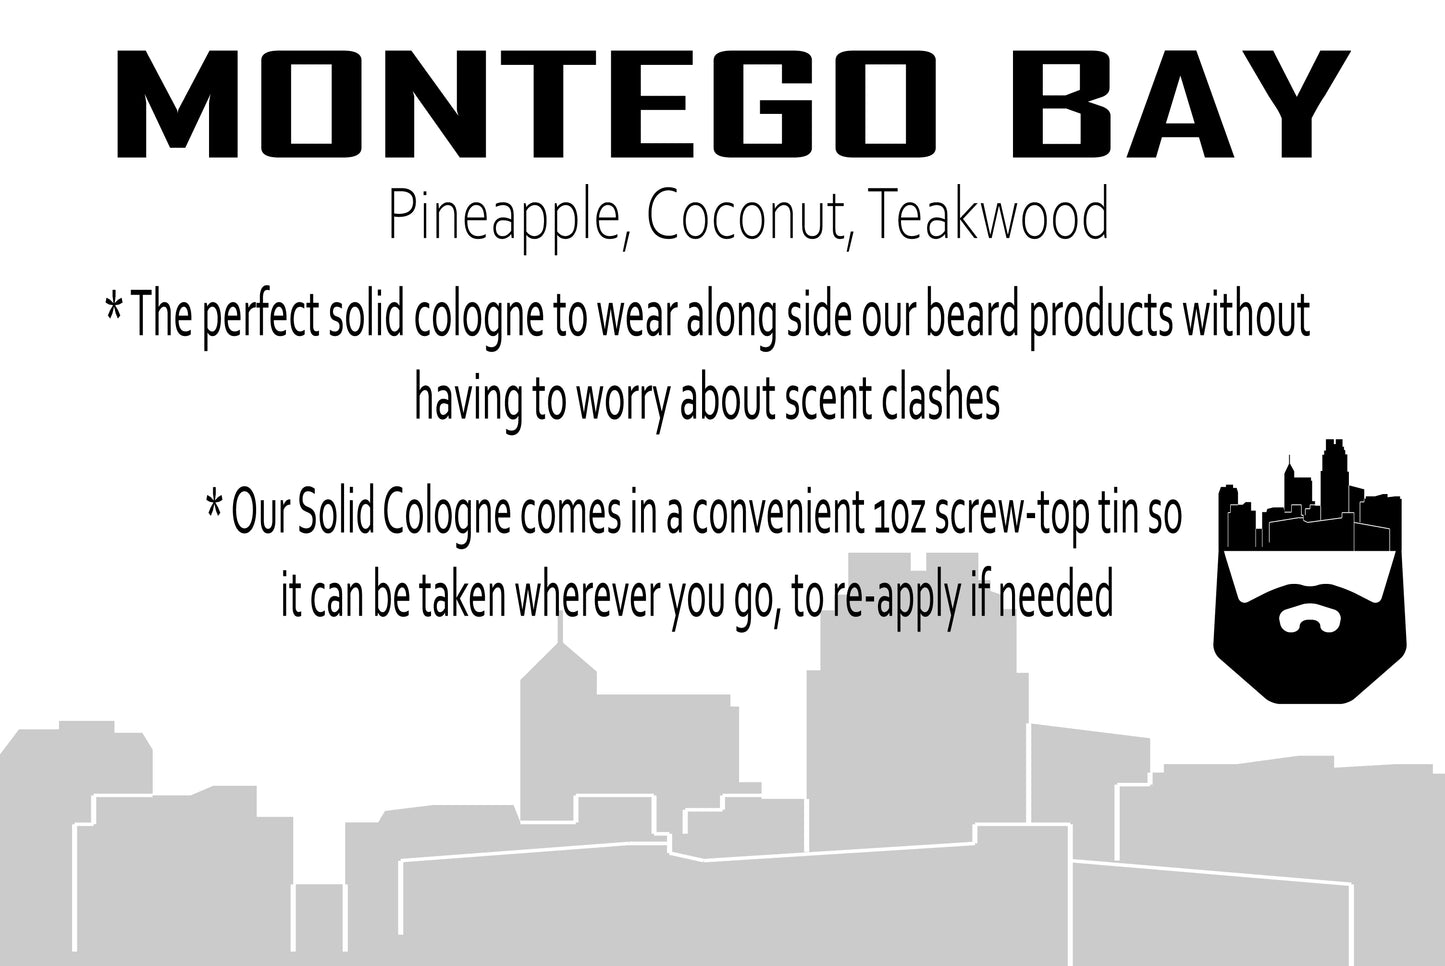 Montego Bay (Solid Cologne) by Oak City Beard Company